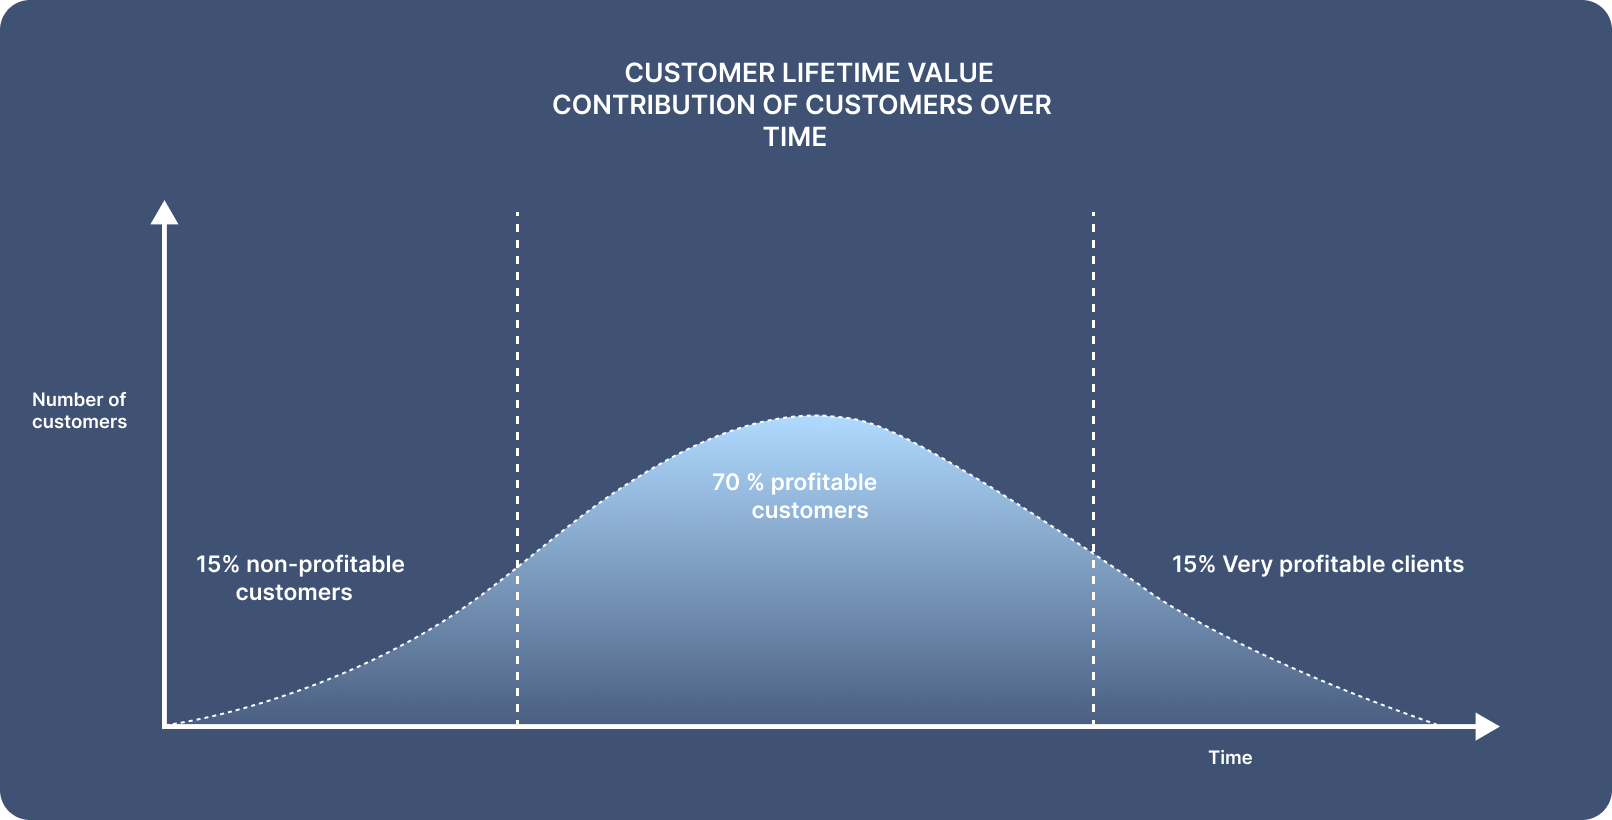 • Customer lifetime value